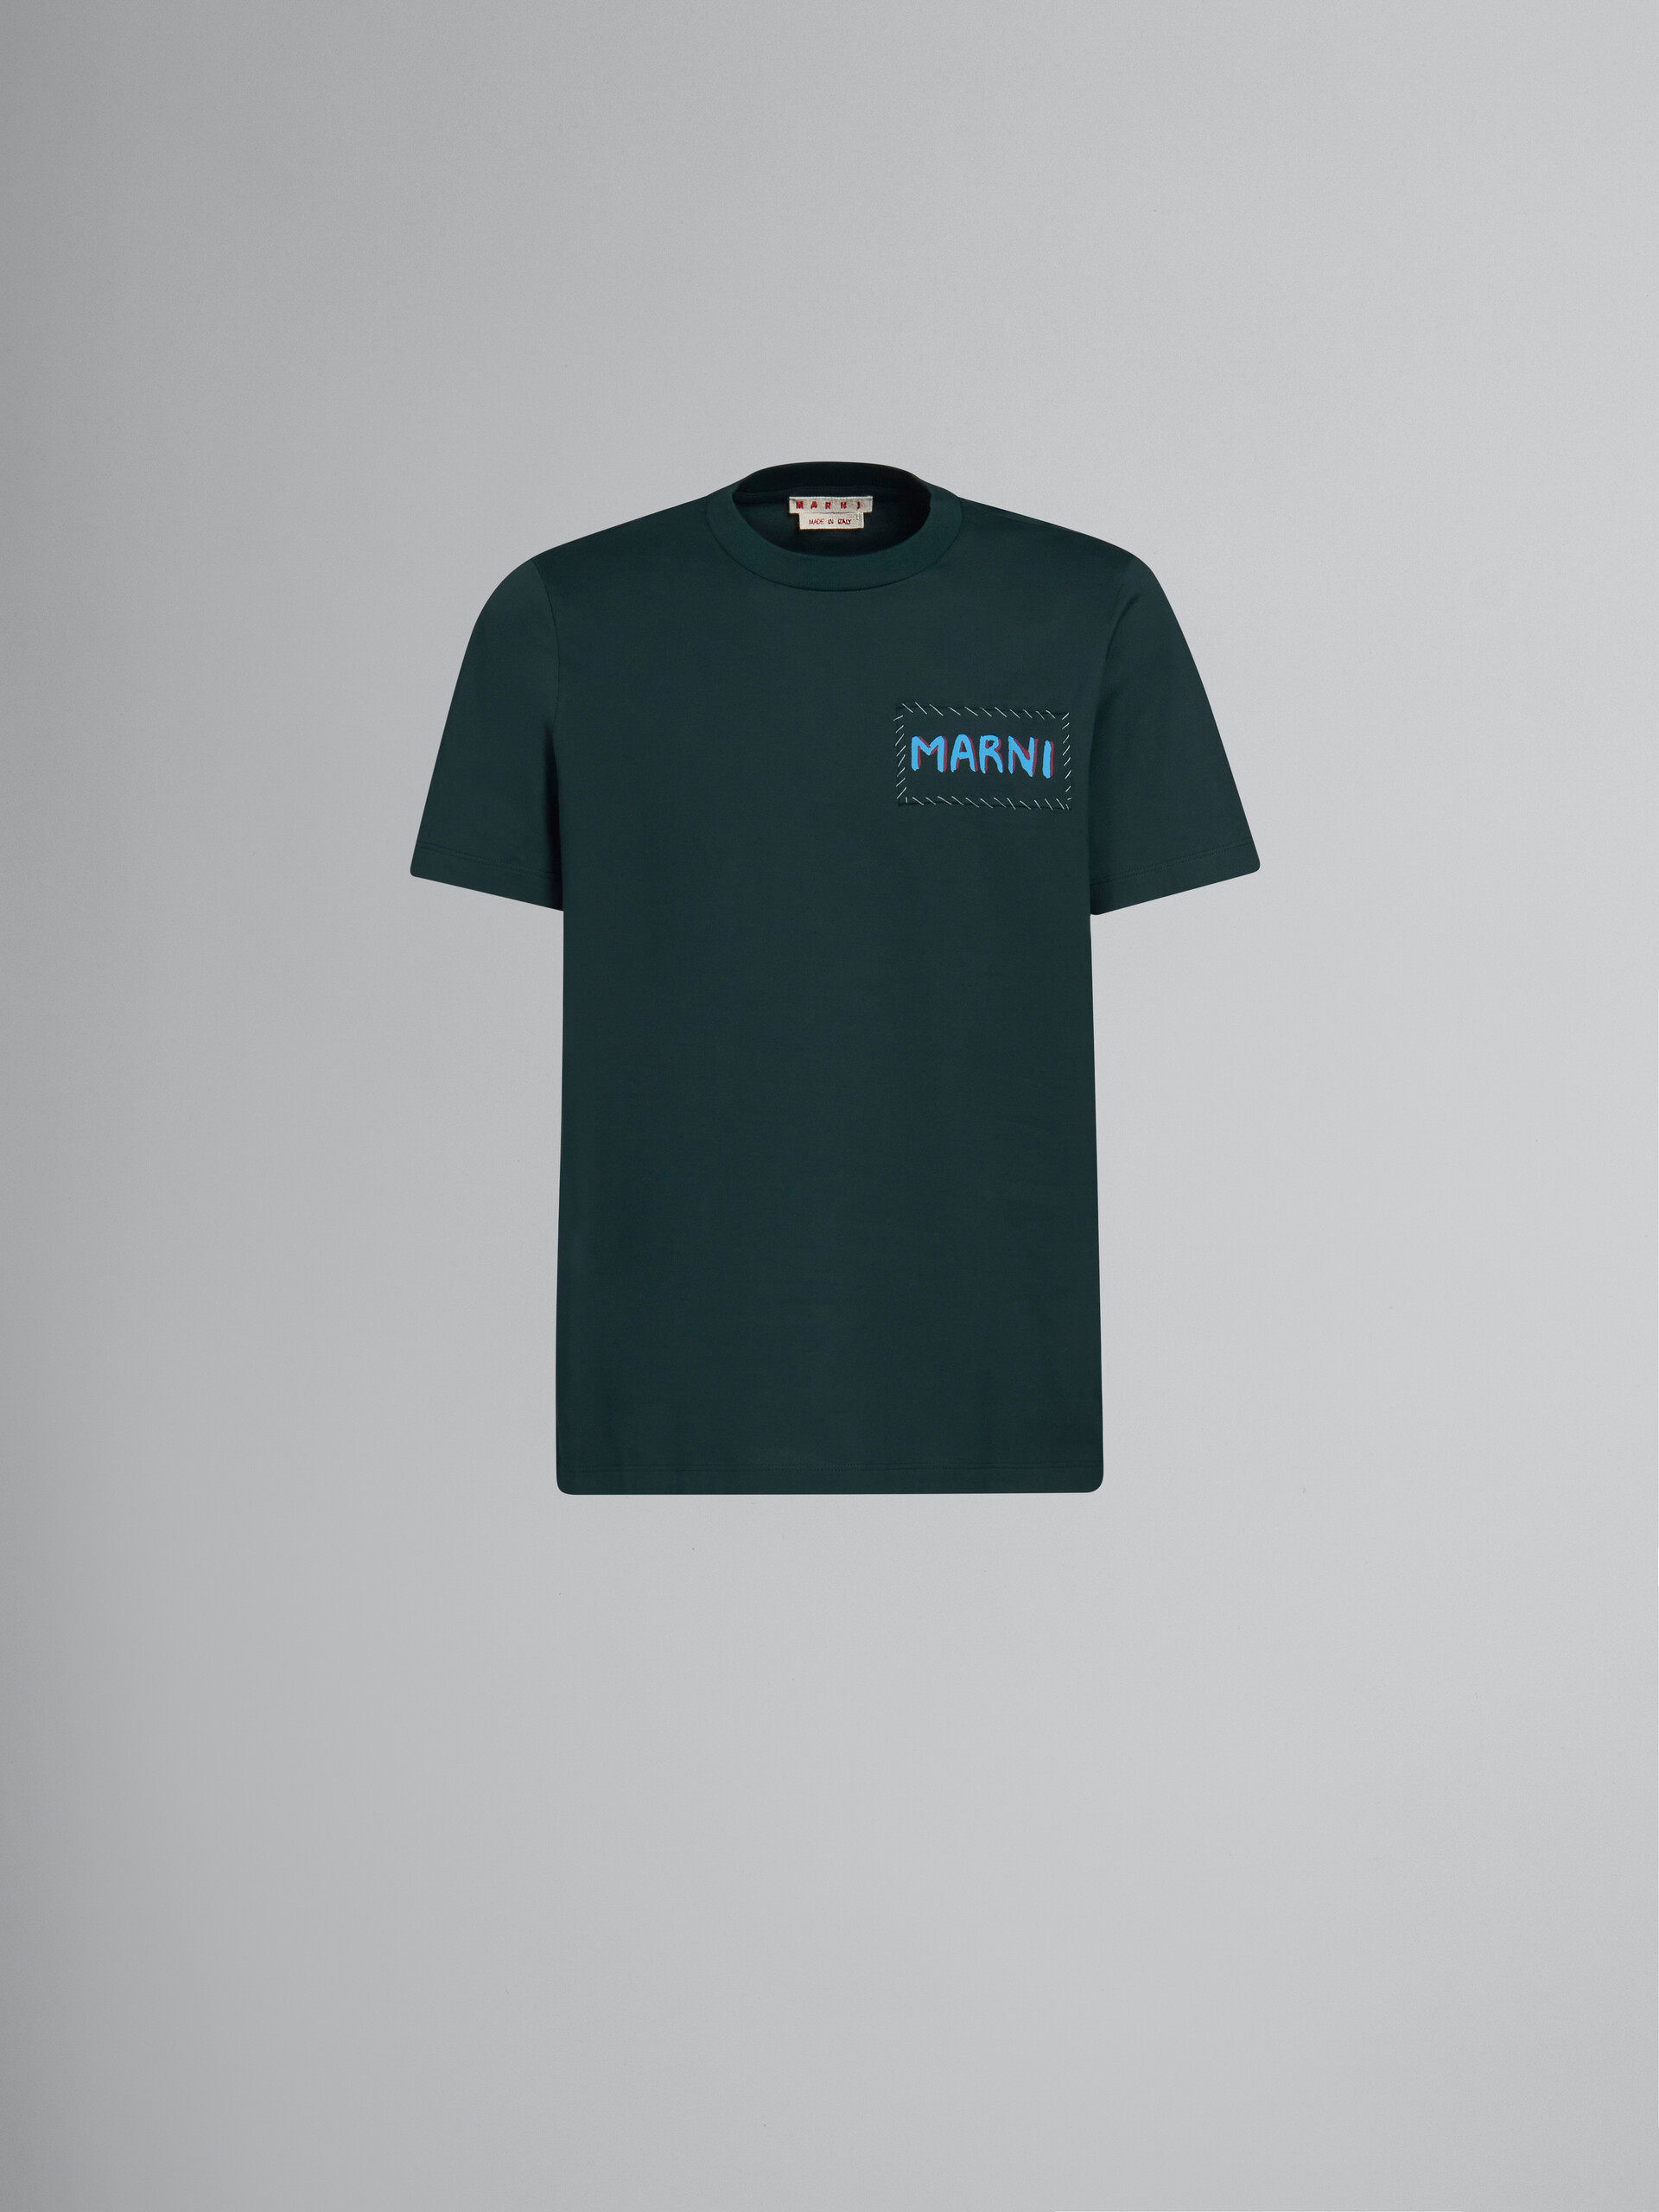 Green organic cotton T-shirt with Marni patch - T-shirts - Image 1